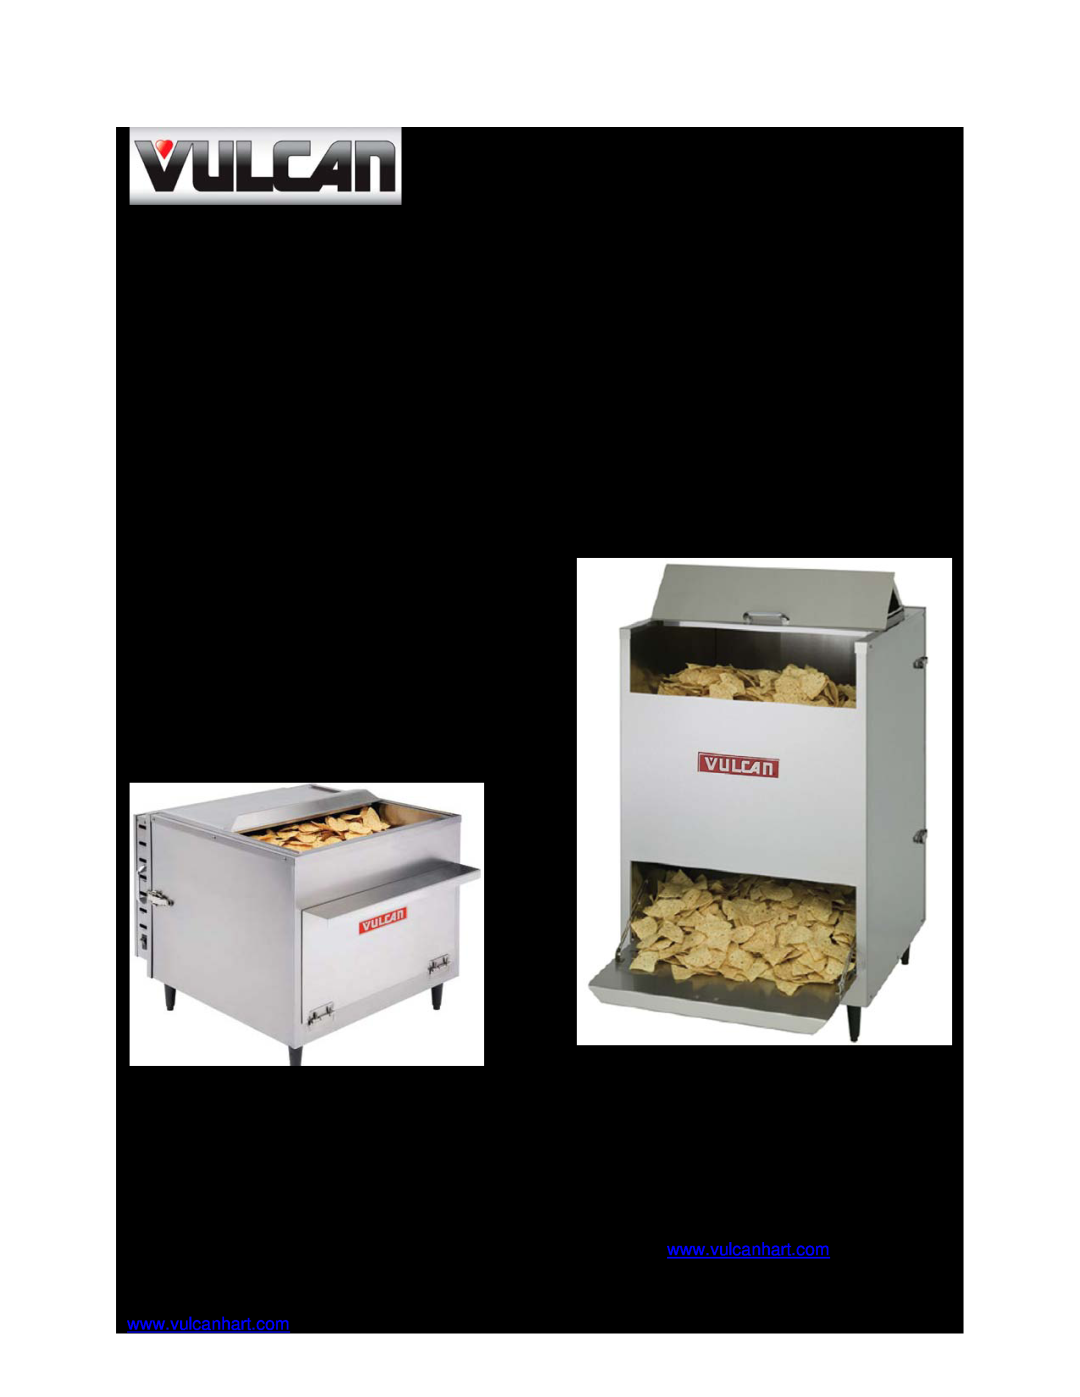 Vulcan-Hart VCD44 ML-138069 operation manual Models, Installation Operation Manual, Vcd Series Chip Warmers, Formerly VCD5 